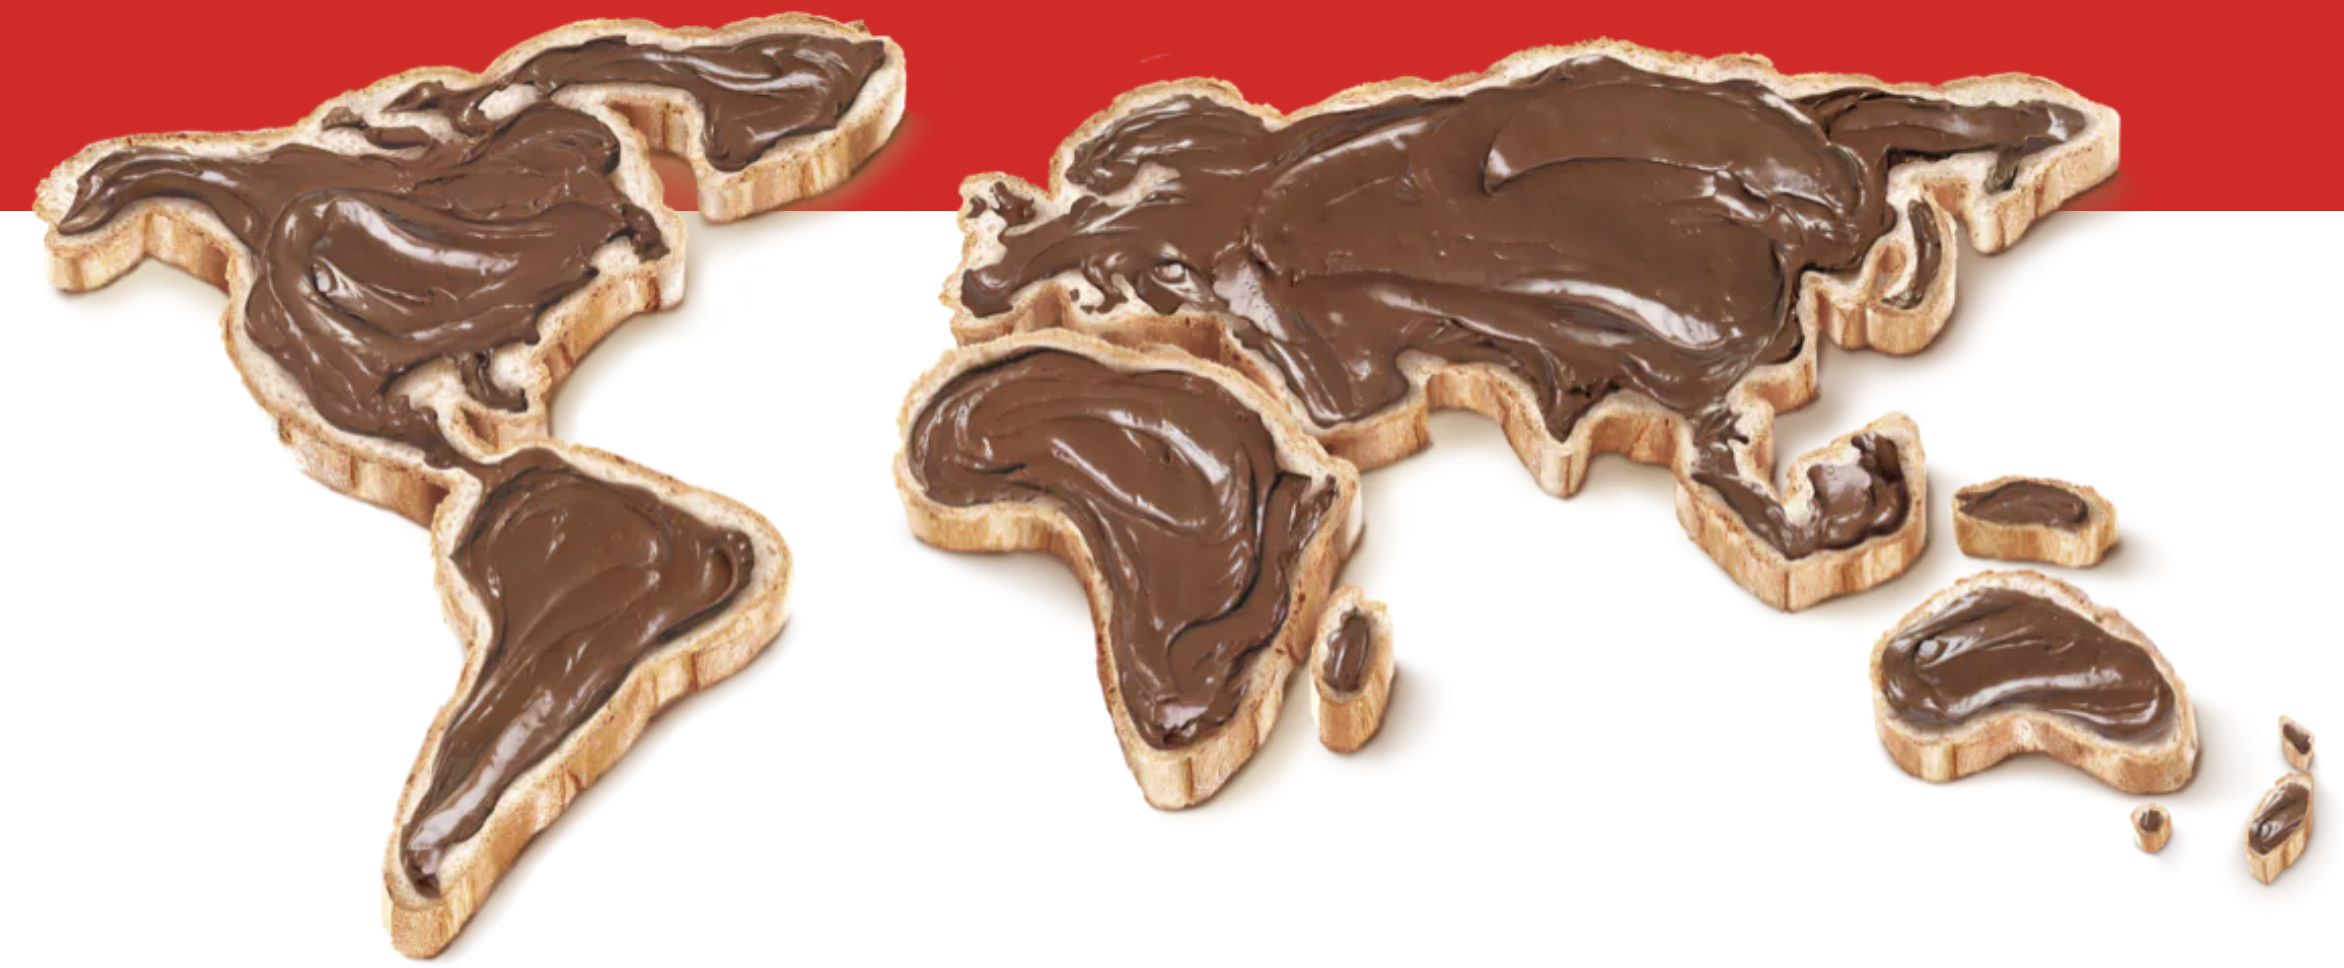 World Nutella Day, illustrated